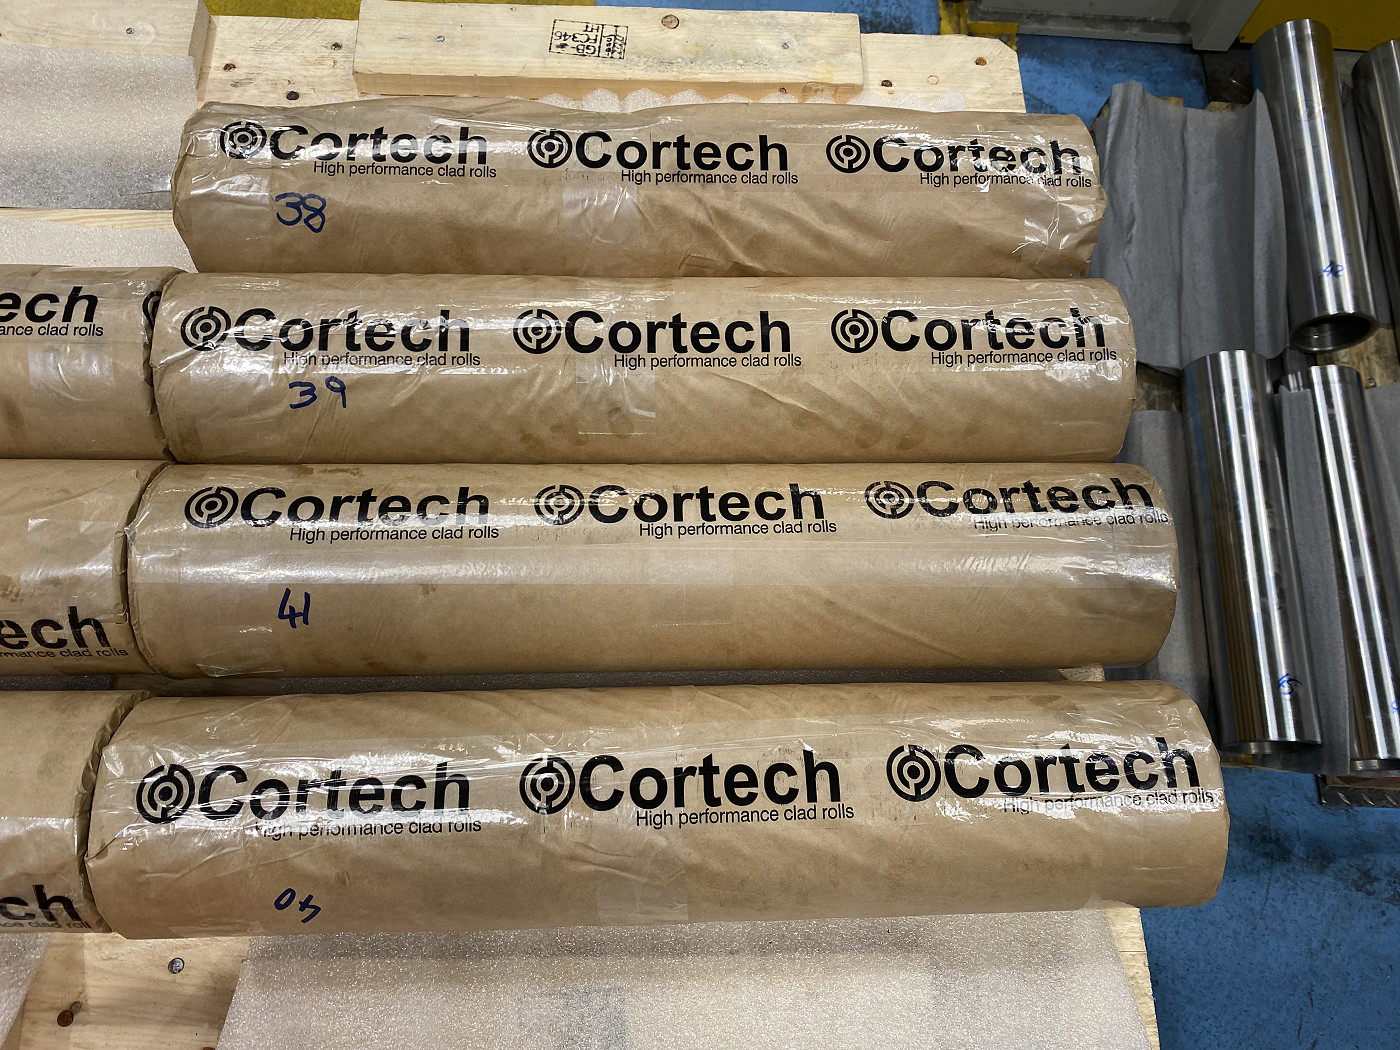 More Cortech Rolls